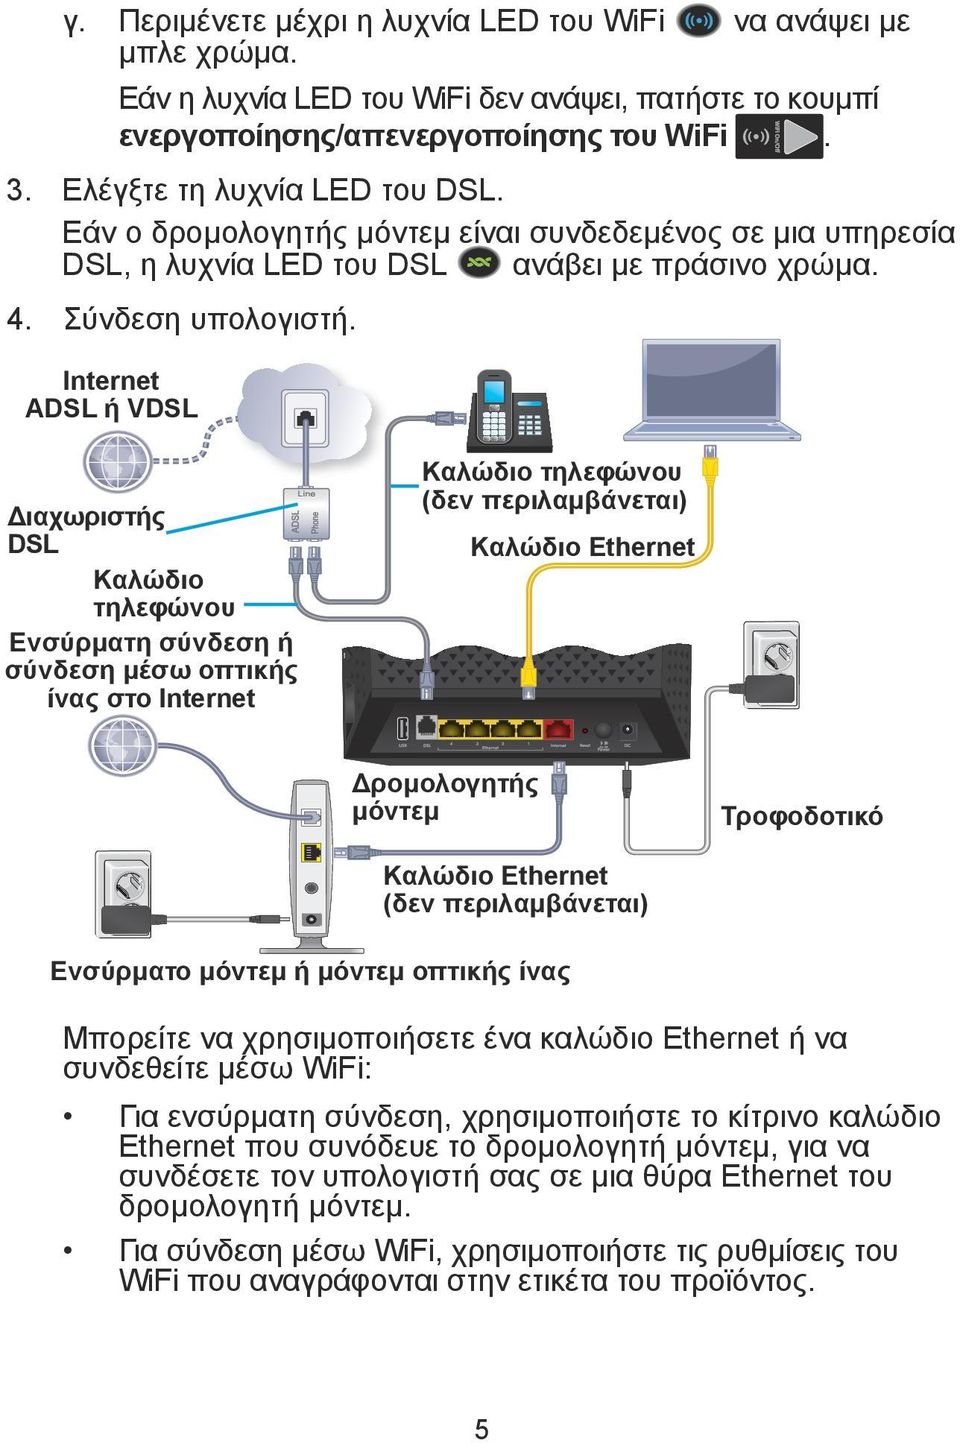 Internet ADSL ή VDSL Διαχωριστής DSL Καλώδιο τηλεφώνου Ενσύρματη σύνδεση ή σύνδεση μέσω οπτικής ίνας στο Internet Καλώδιο τηλεφώνου (δεν περιλαμβάνεται) Καλώδιο Εthernet Δρομολογητής μόντεμ